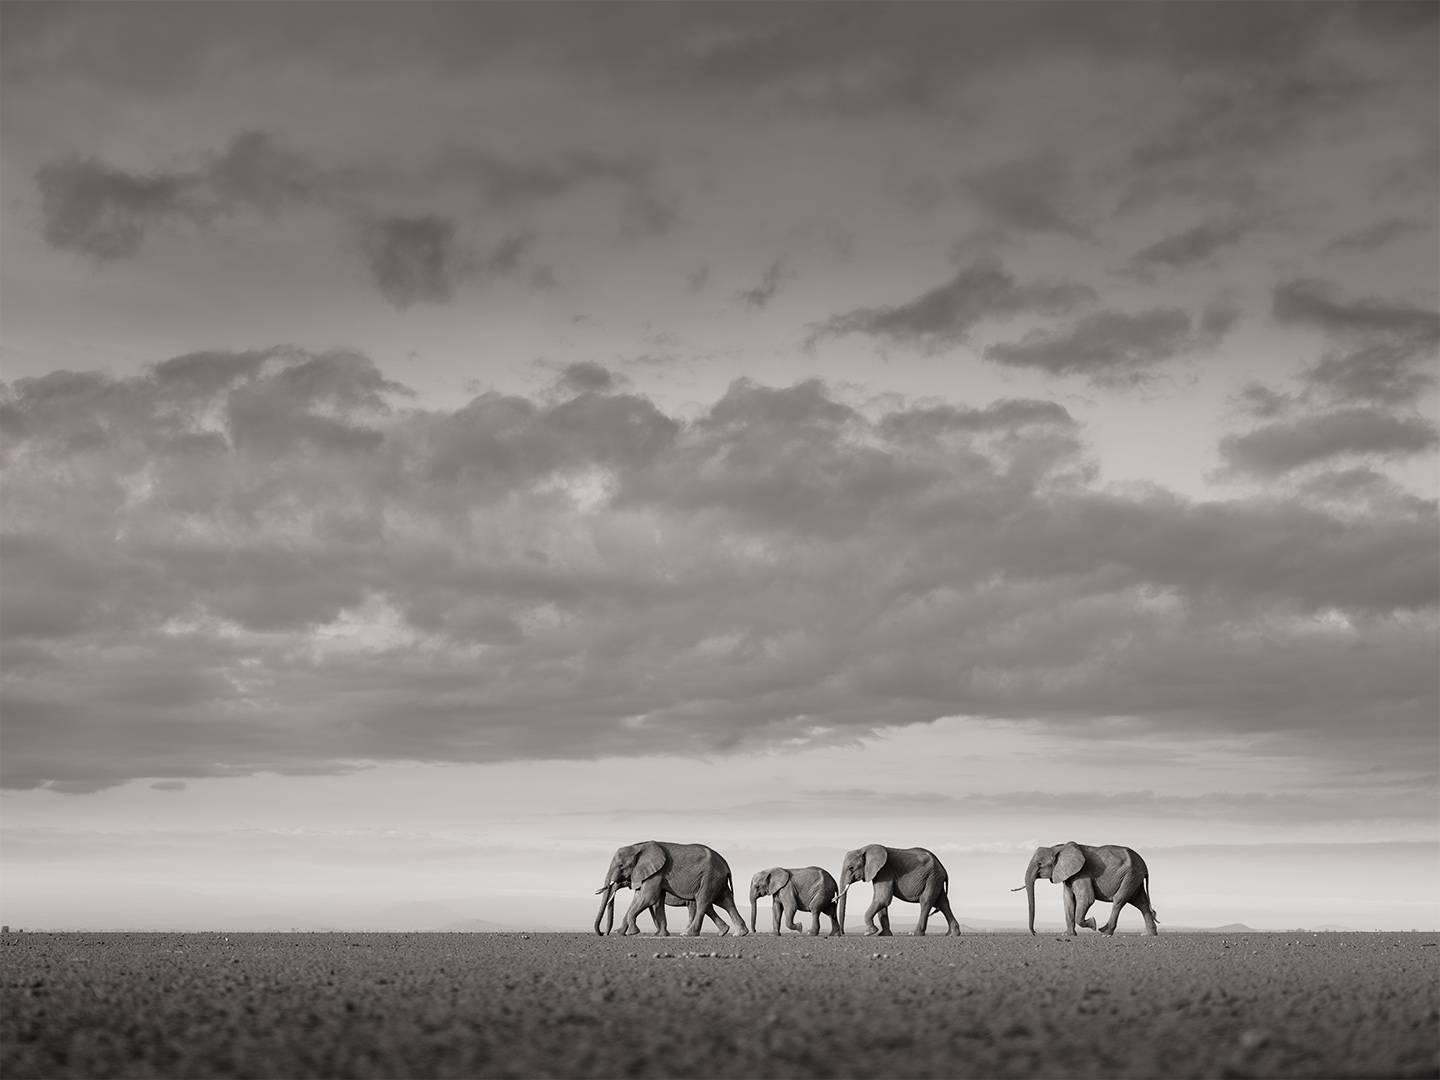 Joachim Schmeisser Landscape Photograph - Elephants crossing, animal, wildlife, black and white photography, africa